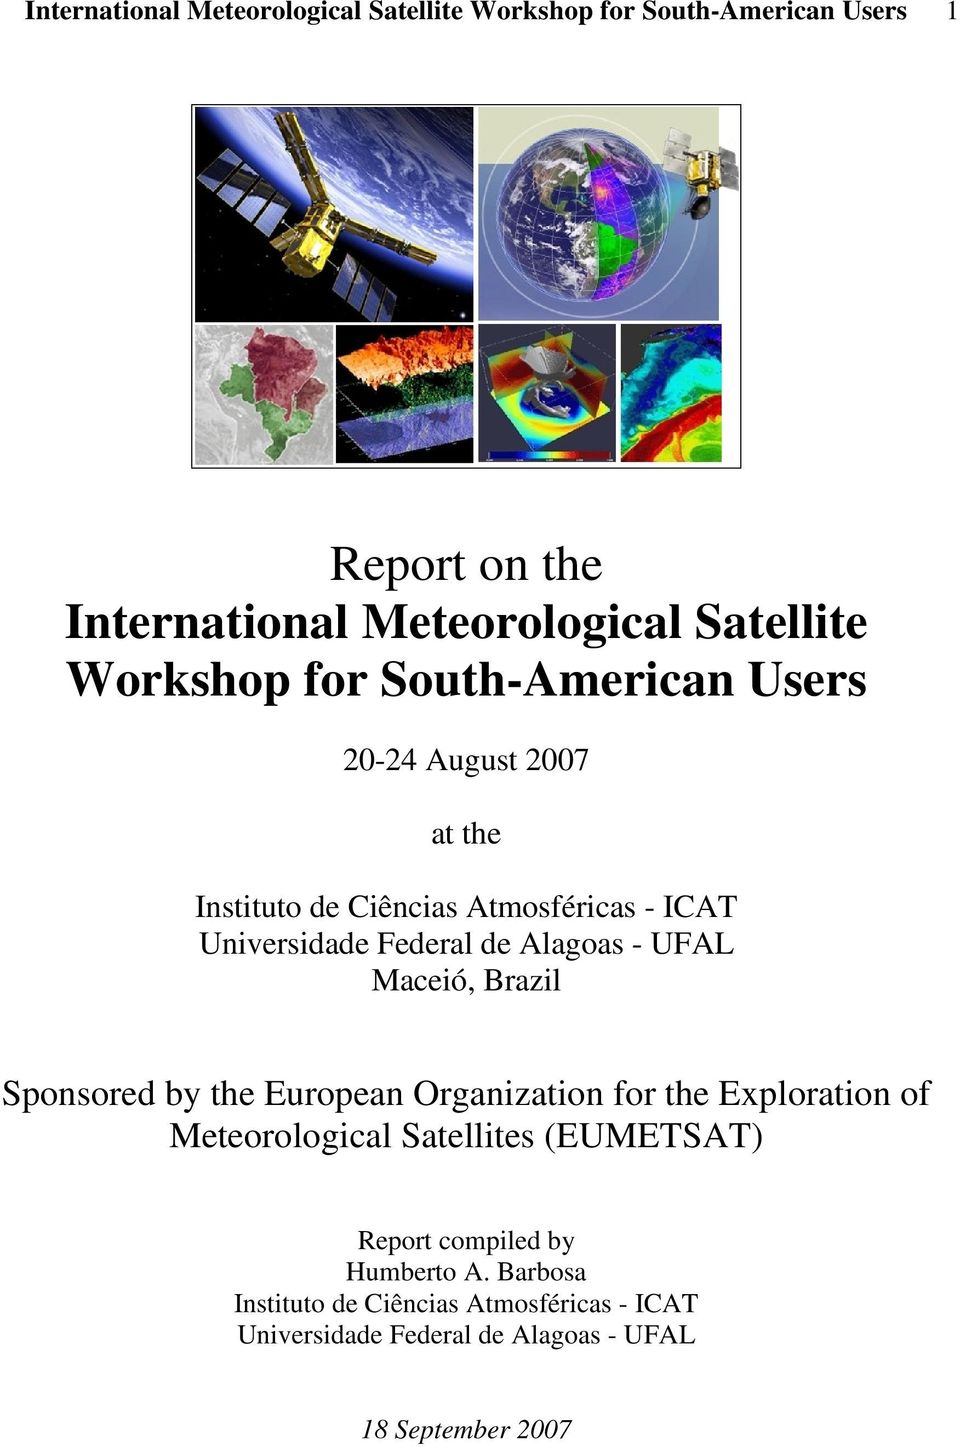 Alagoas - UFAL Maceió, Brazil Sponsored by the European Organization for the Exploration of Meteorological Satellites (EUMETSAT)